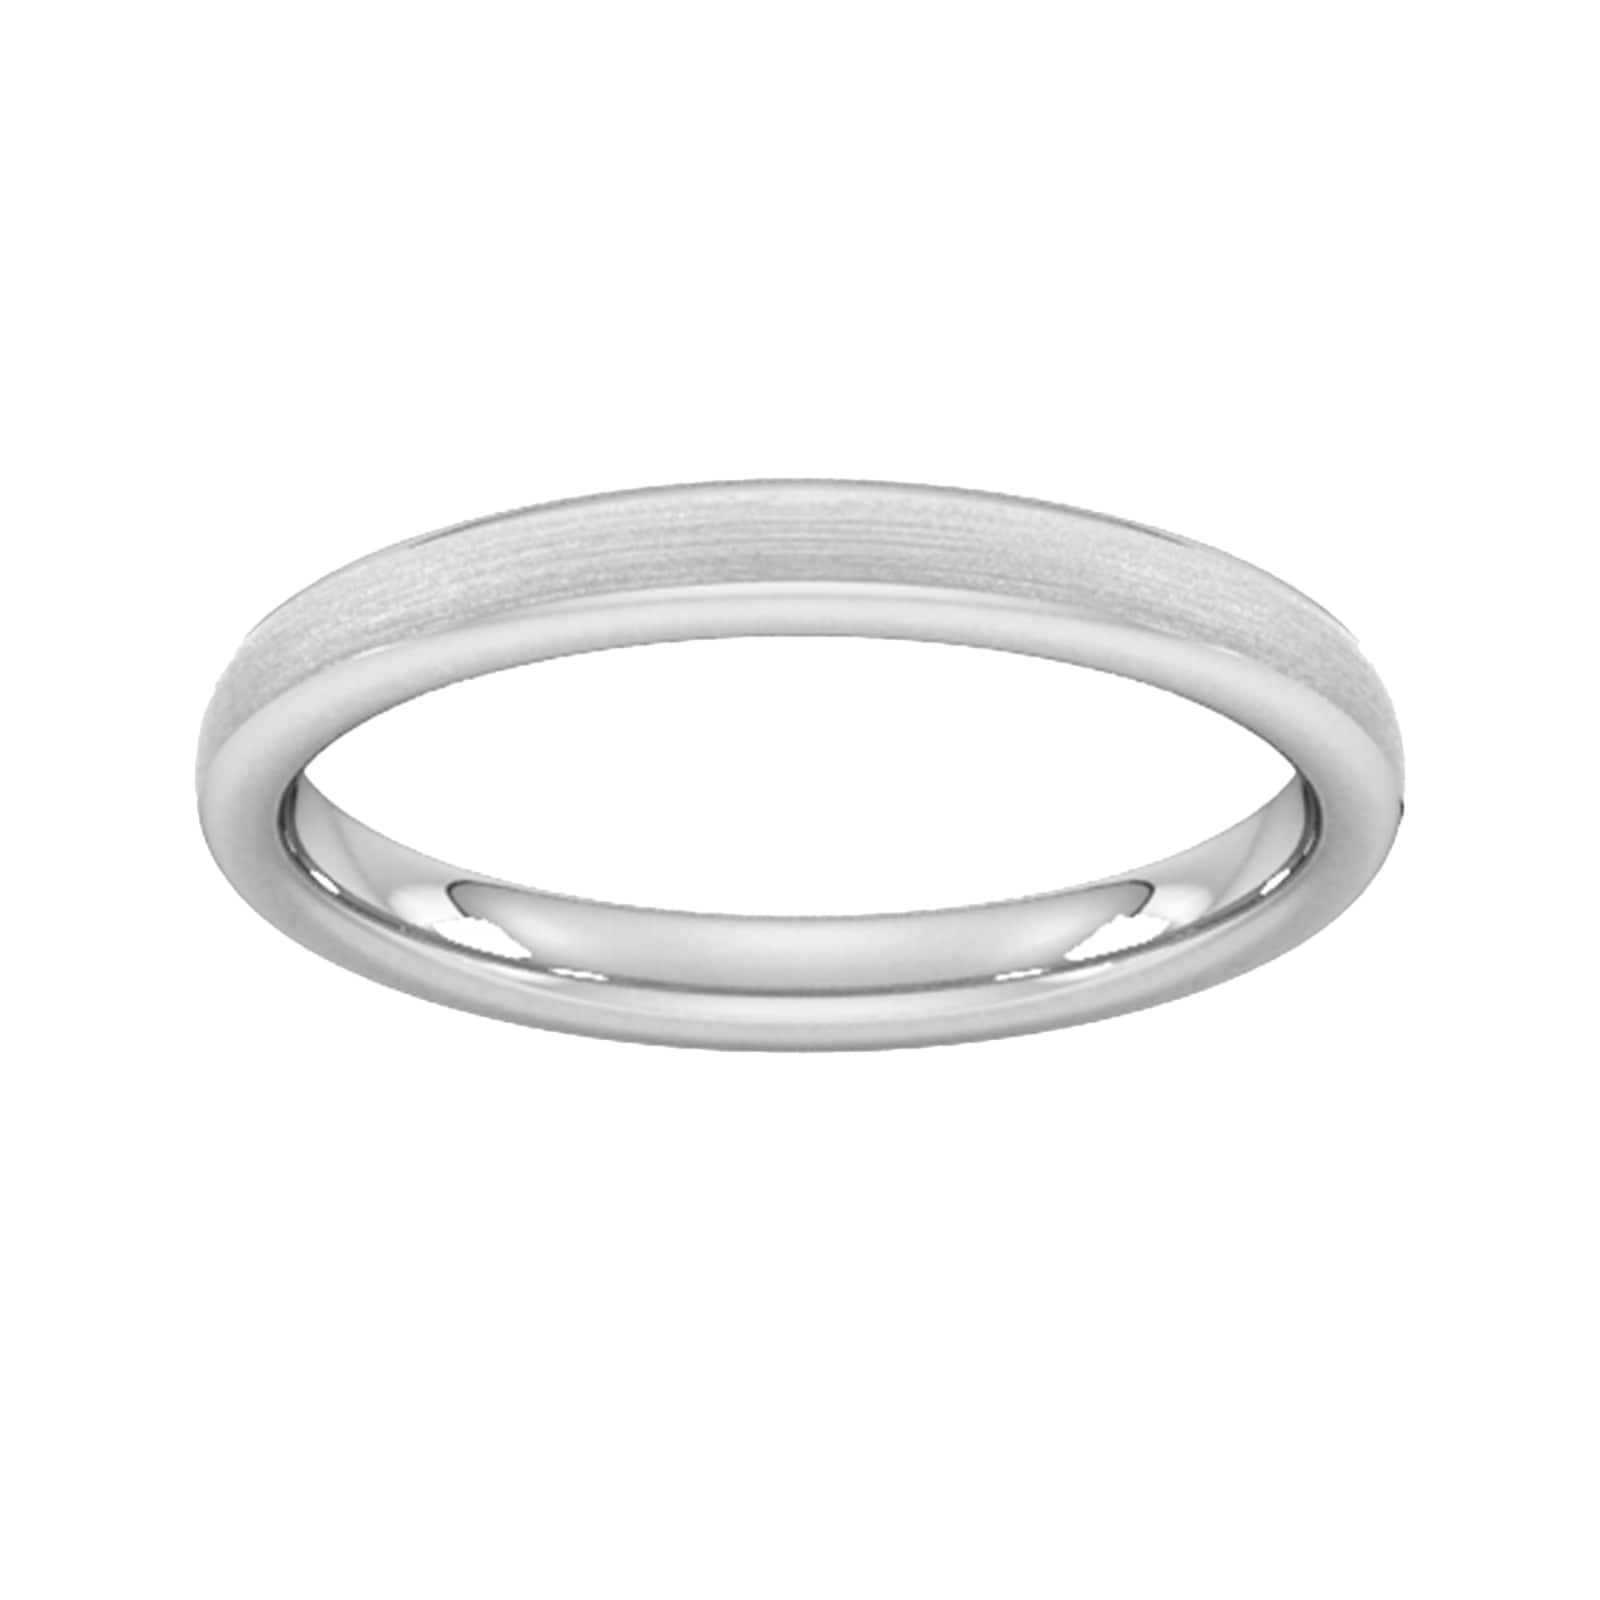 2.5mm D Shape Standard Matt Finished Wedding Ring In 950 Palladium - Ring Size N